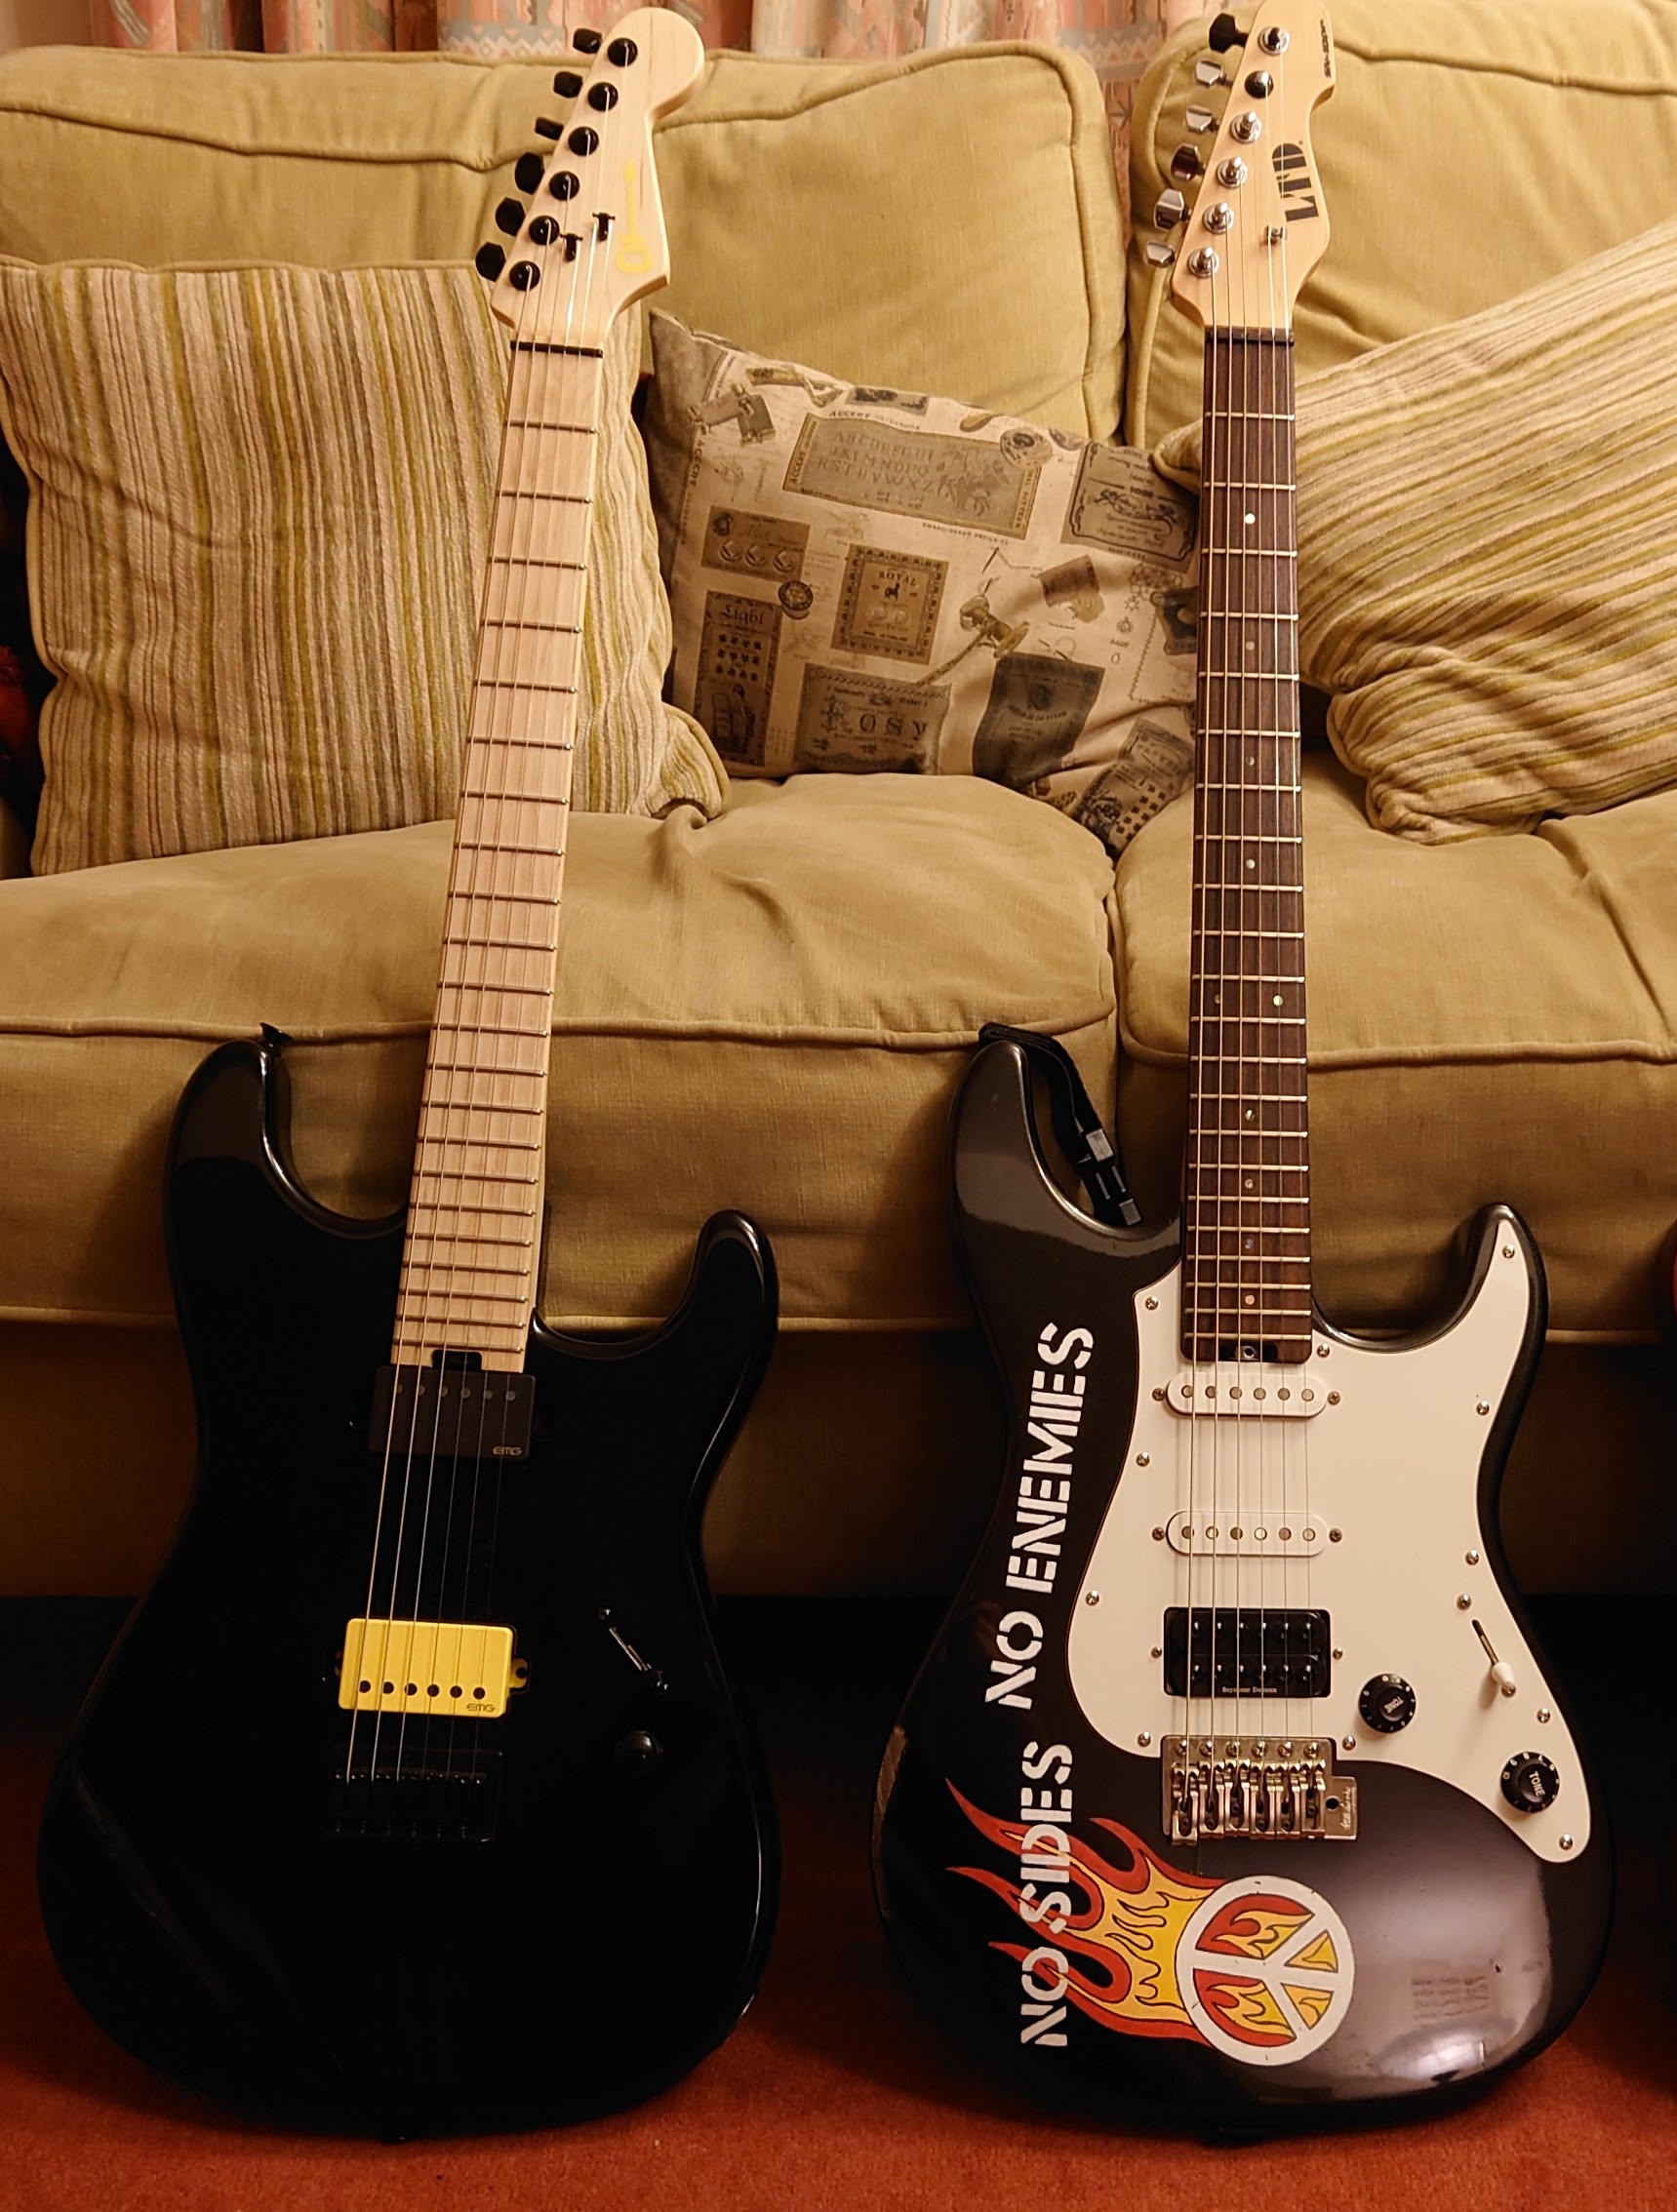 While She Sleeps guitars